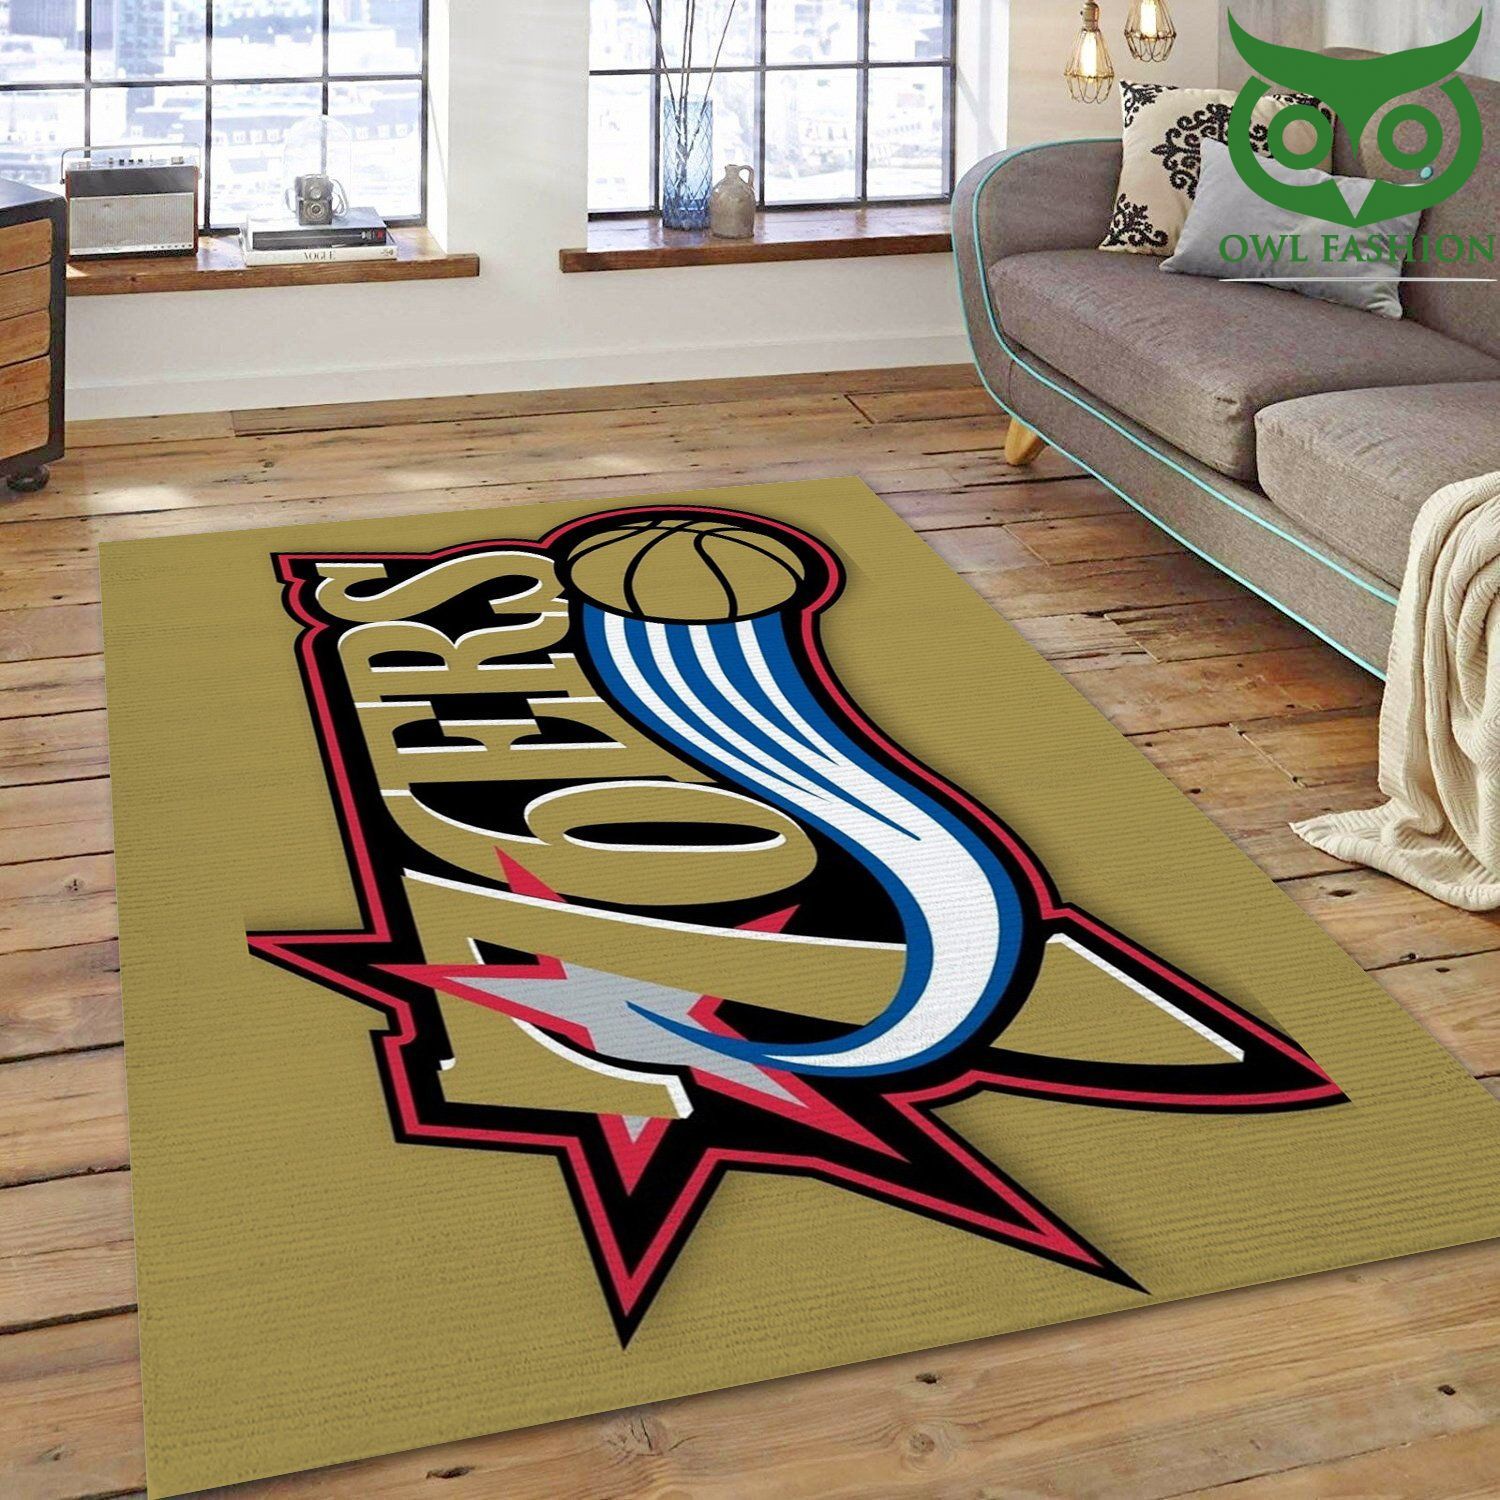 76ers Team Living Room NBA carpet rug